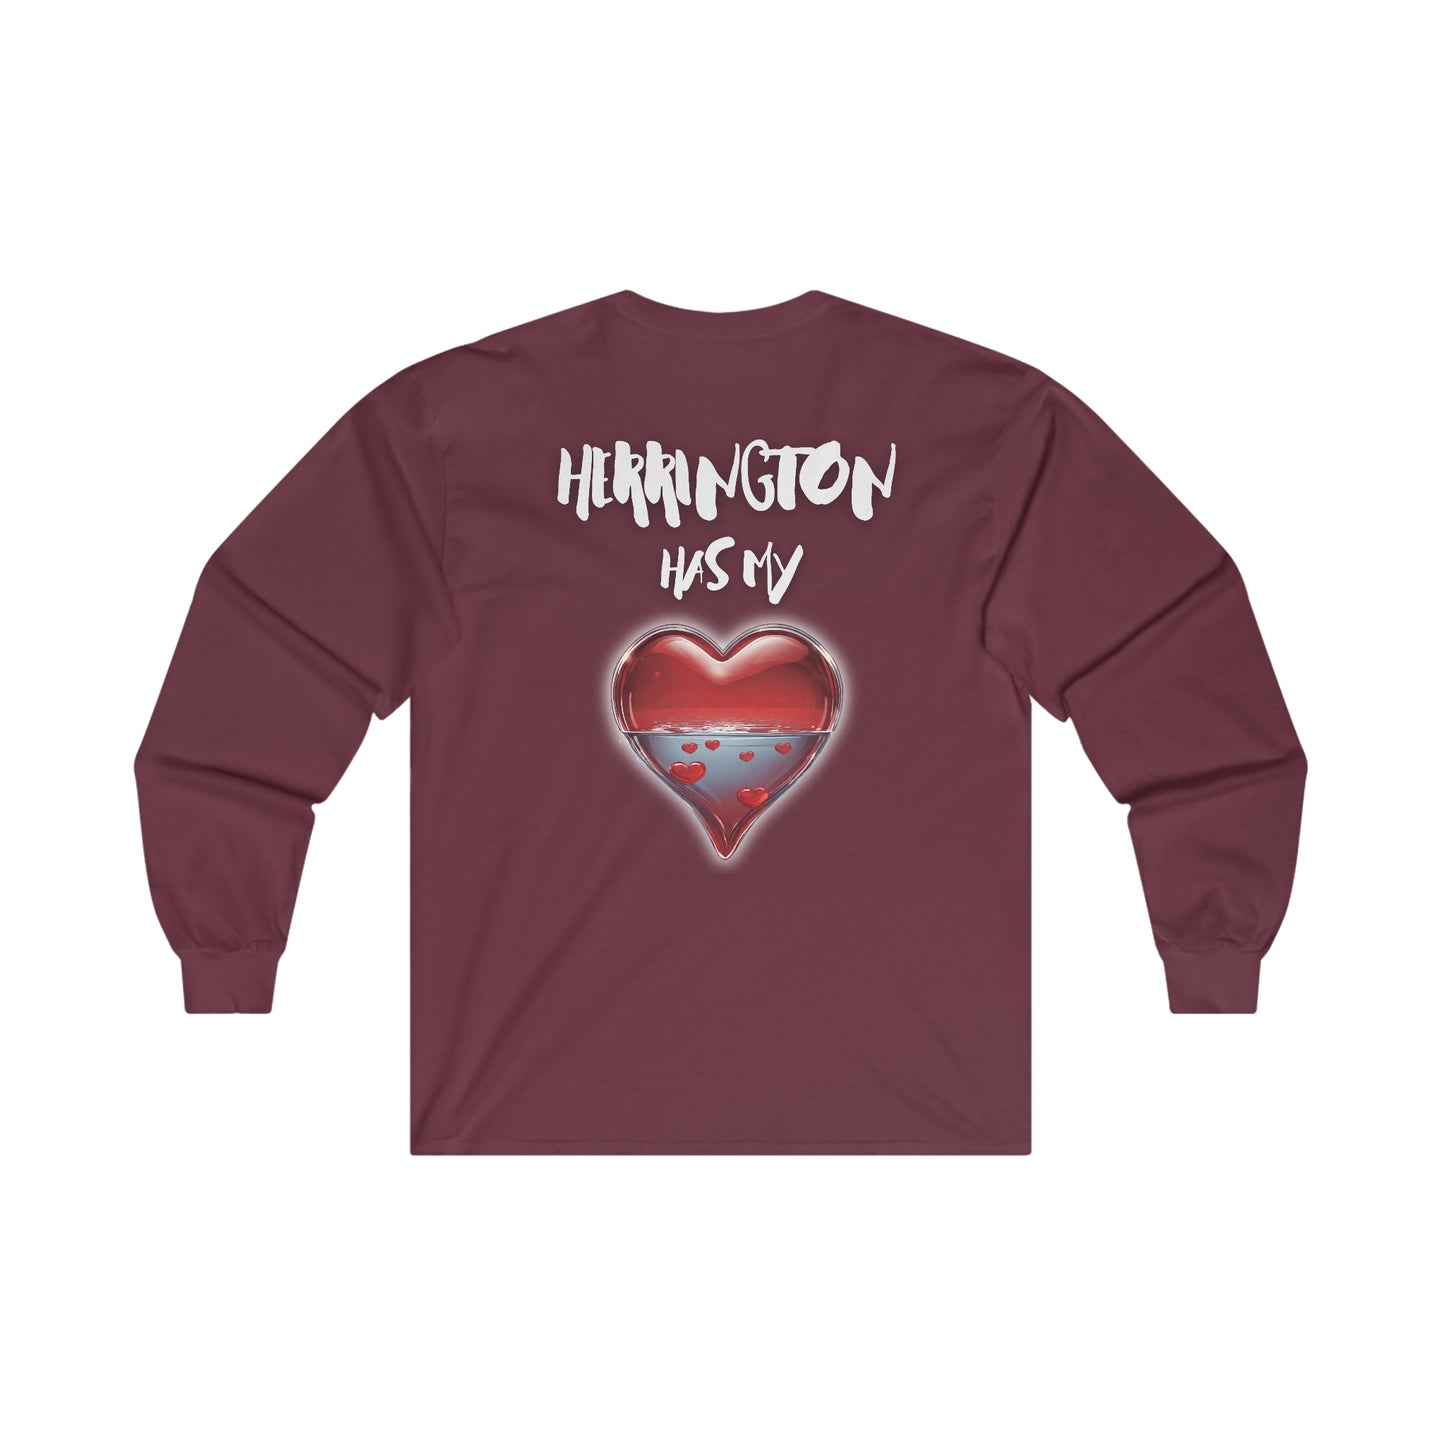 "Herrington Has My Heart" Ultra Cotton Double-Sided Long Sleeve Tee